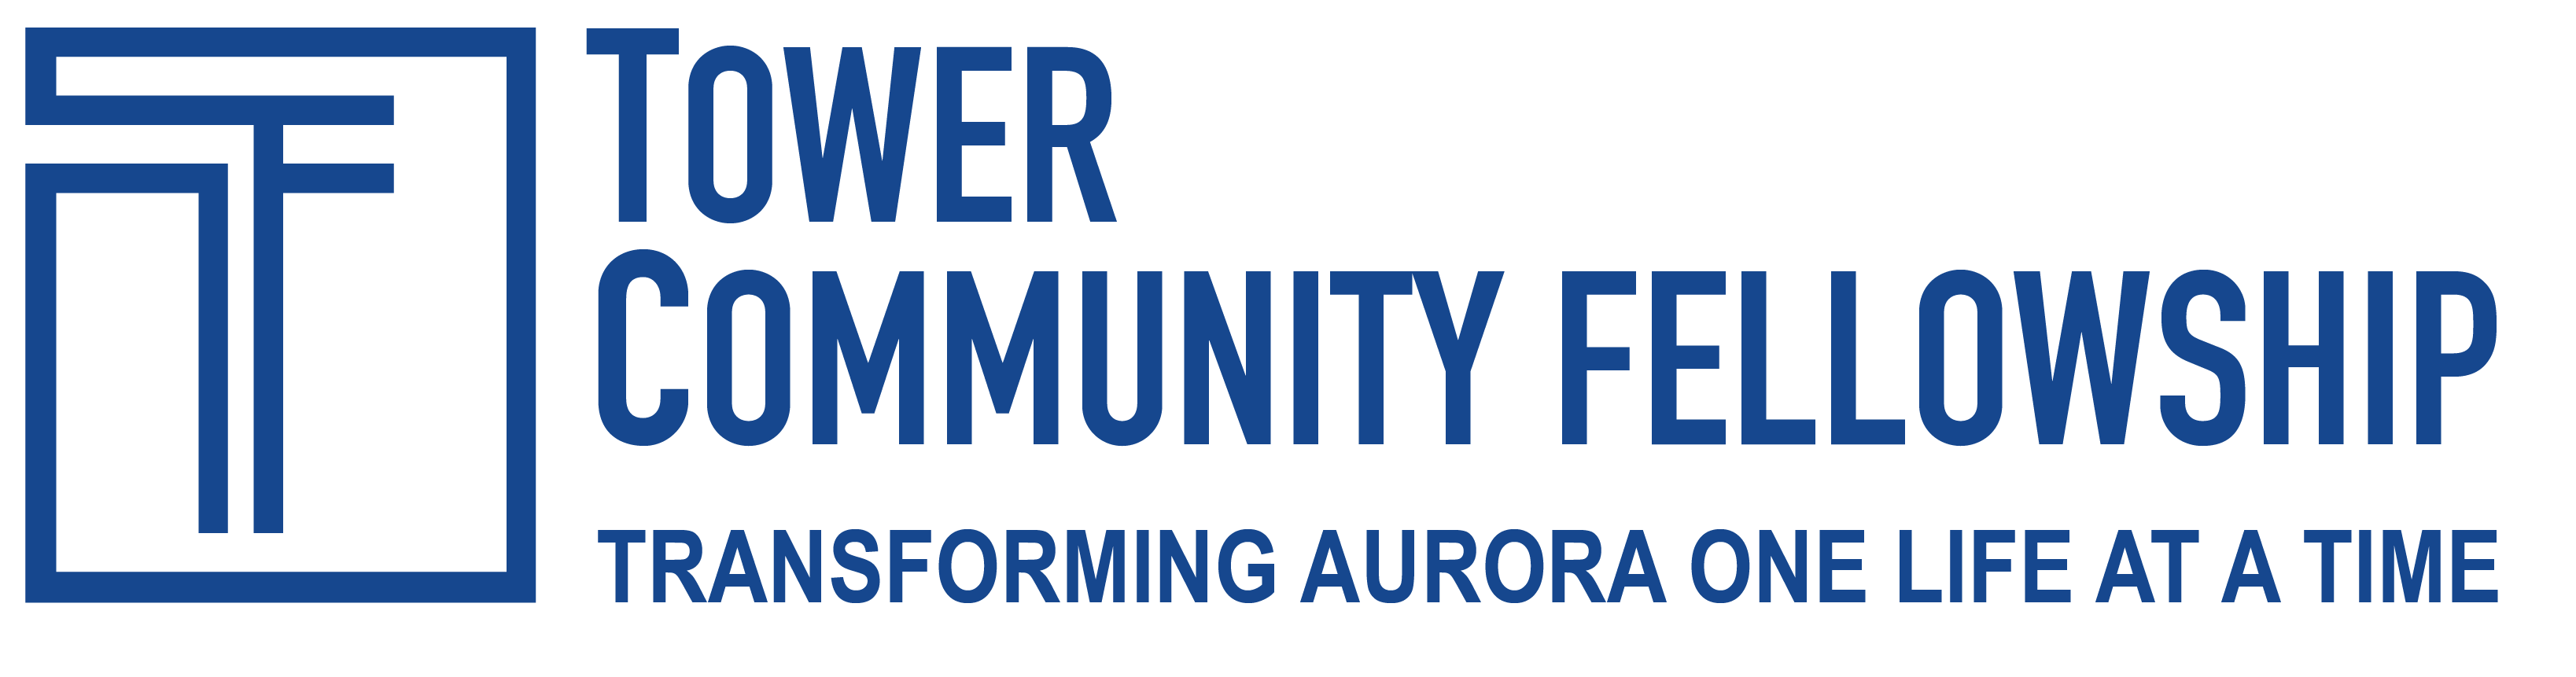 Tower Community Fellowship